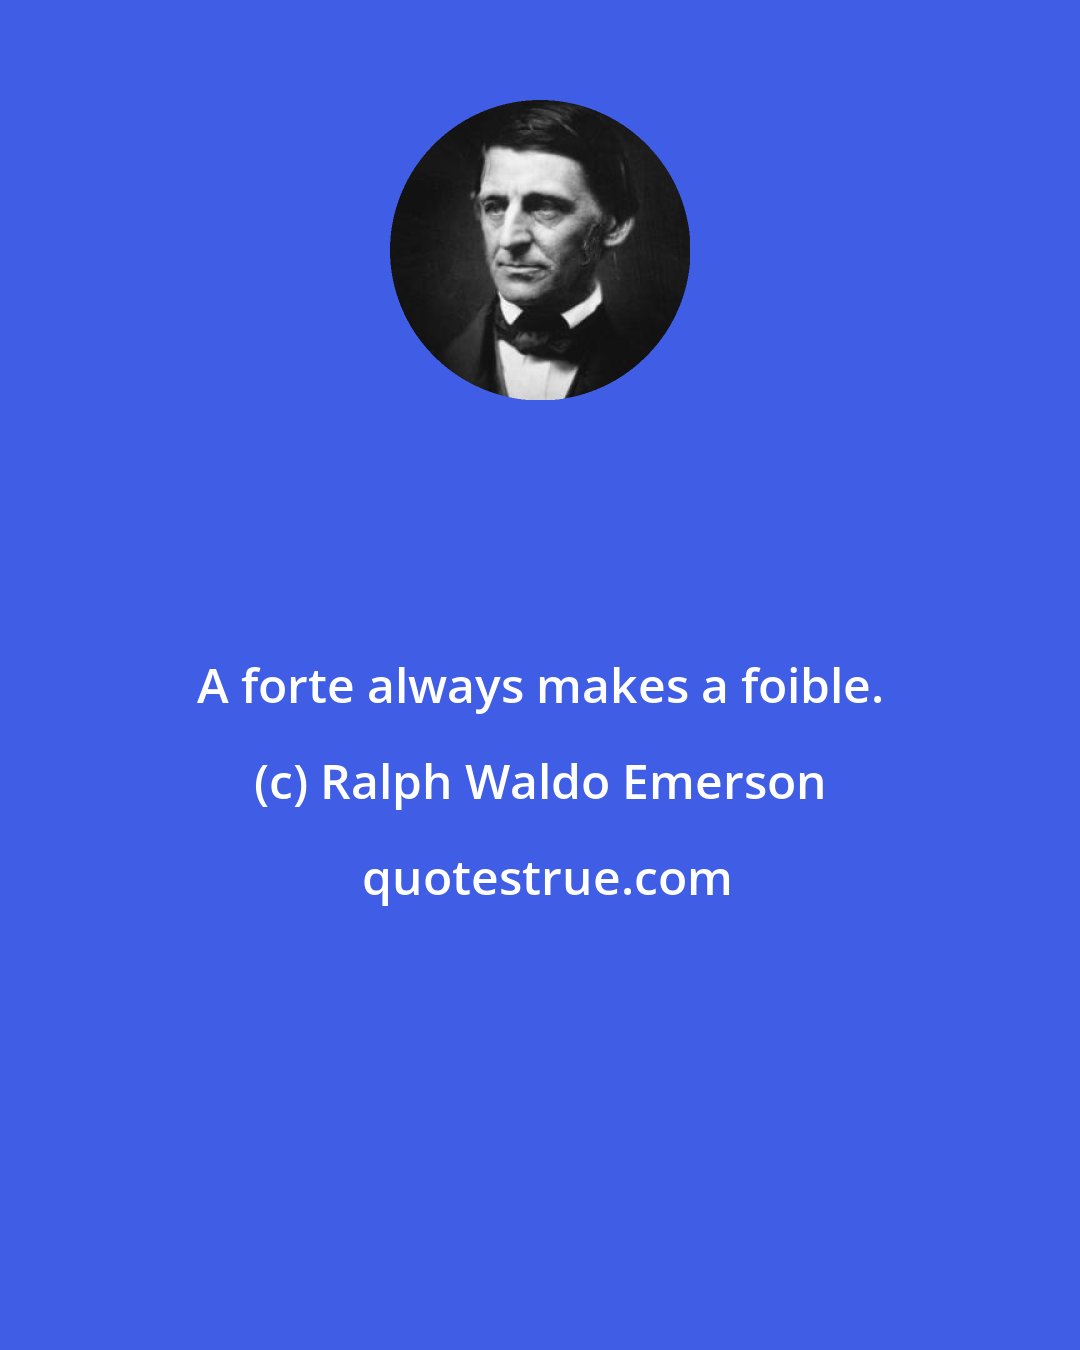 Ralph Waldo Emerson: A forte always makes a foible.